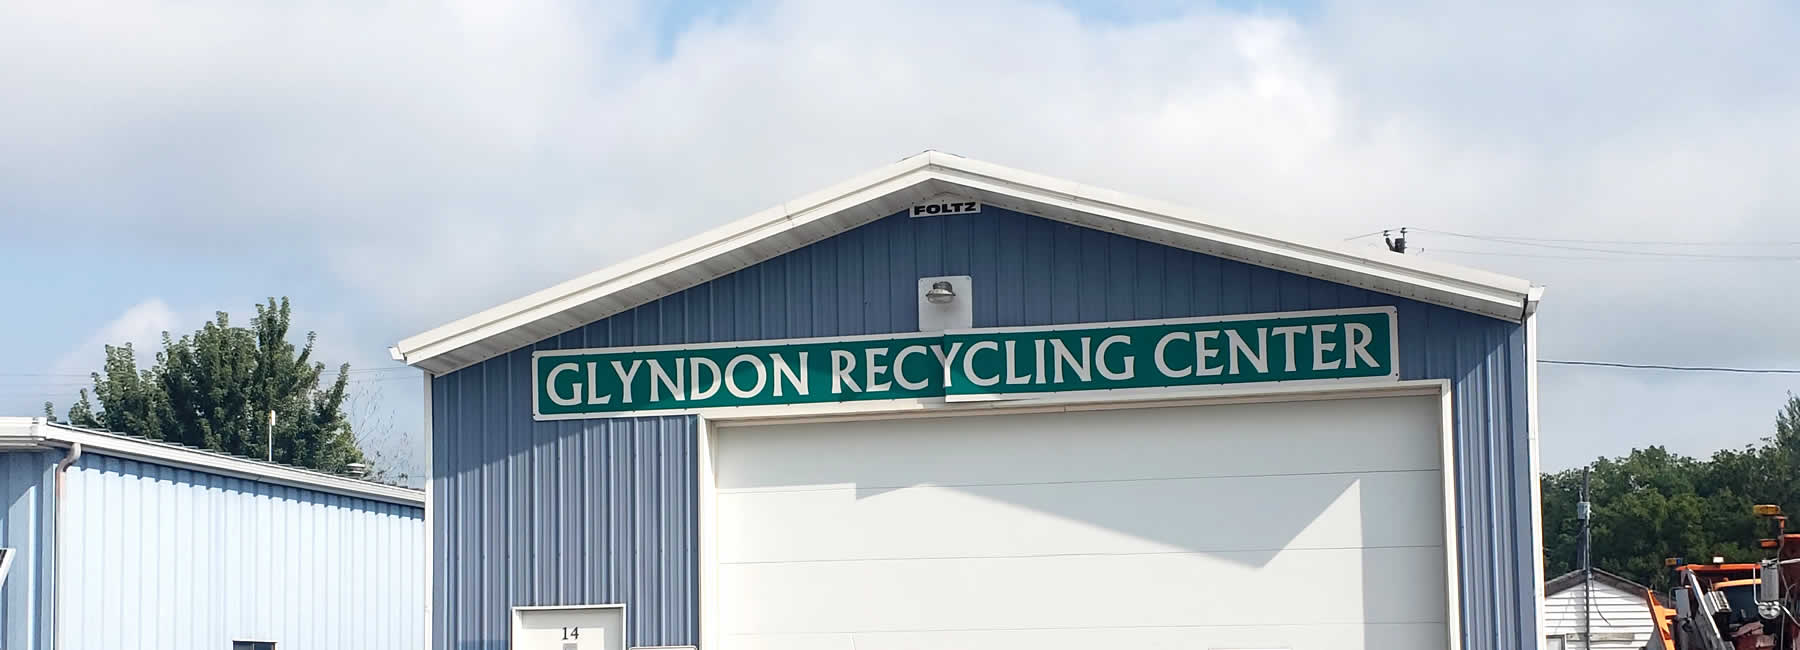 Glyndon, Minnesota Recycling Center